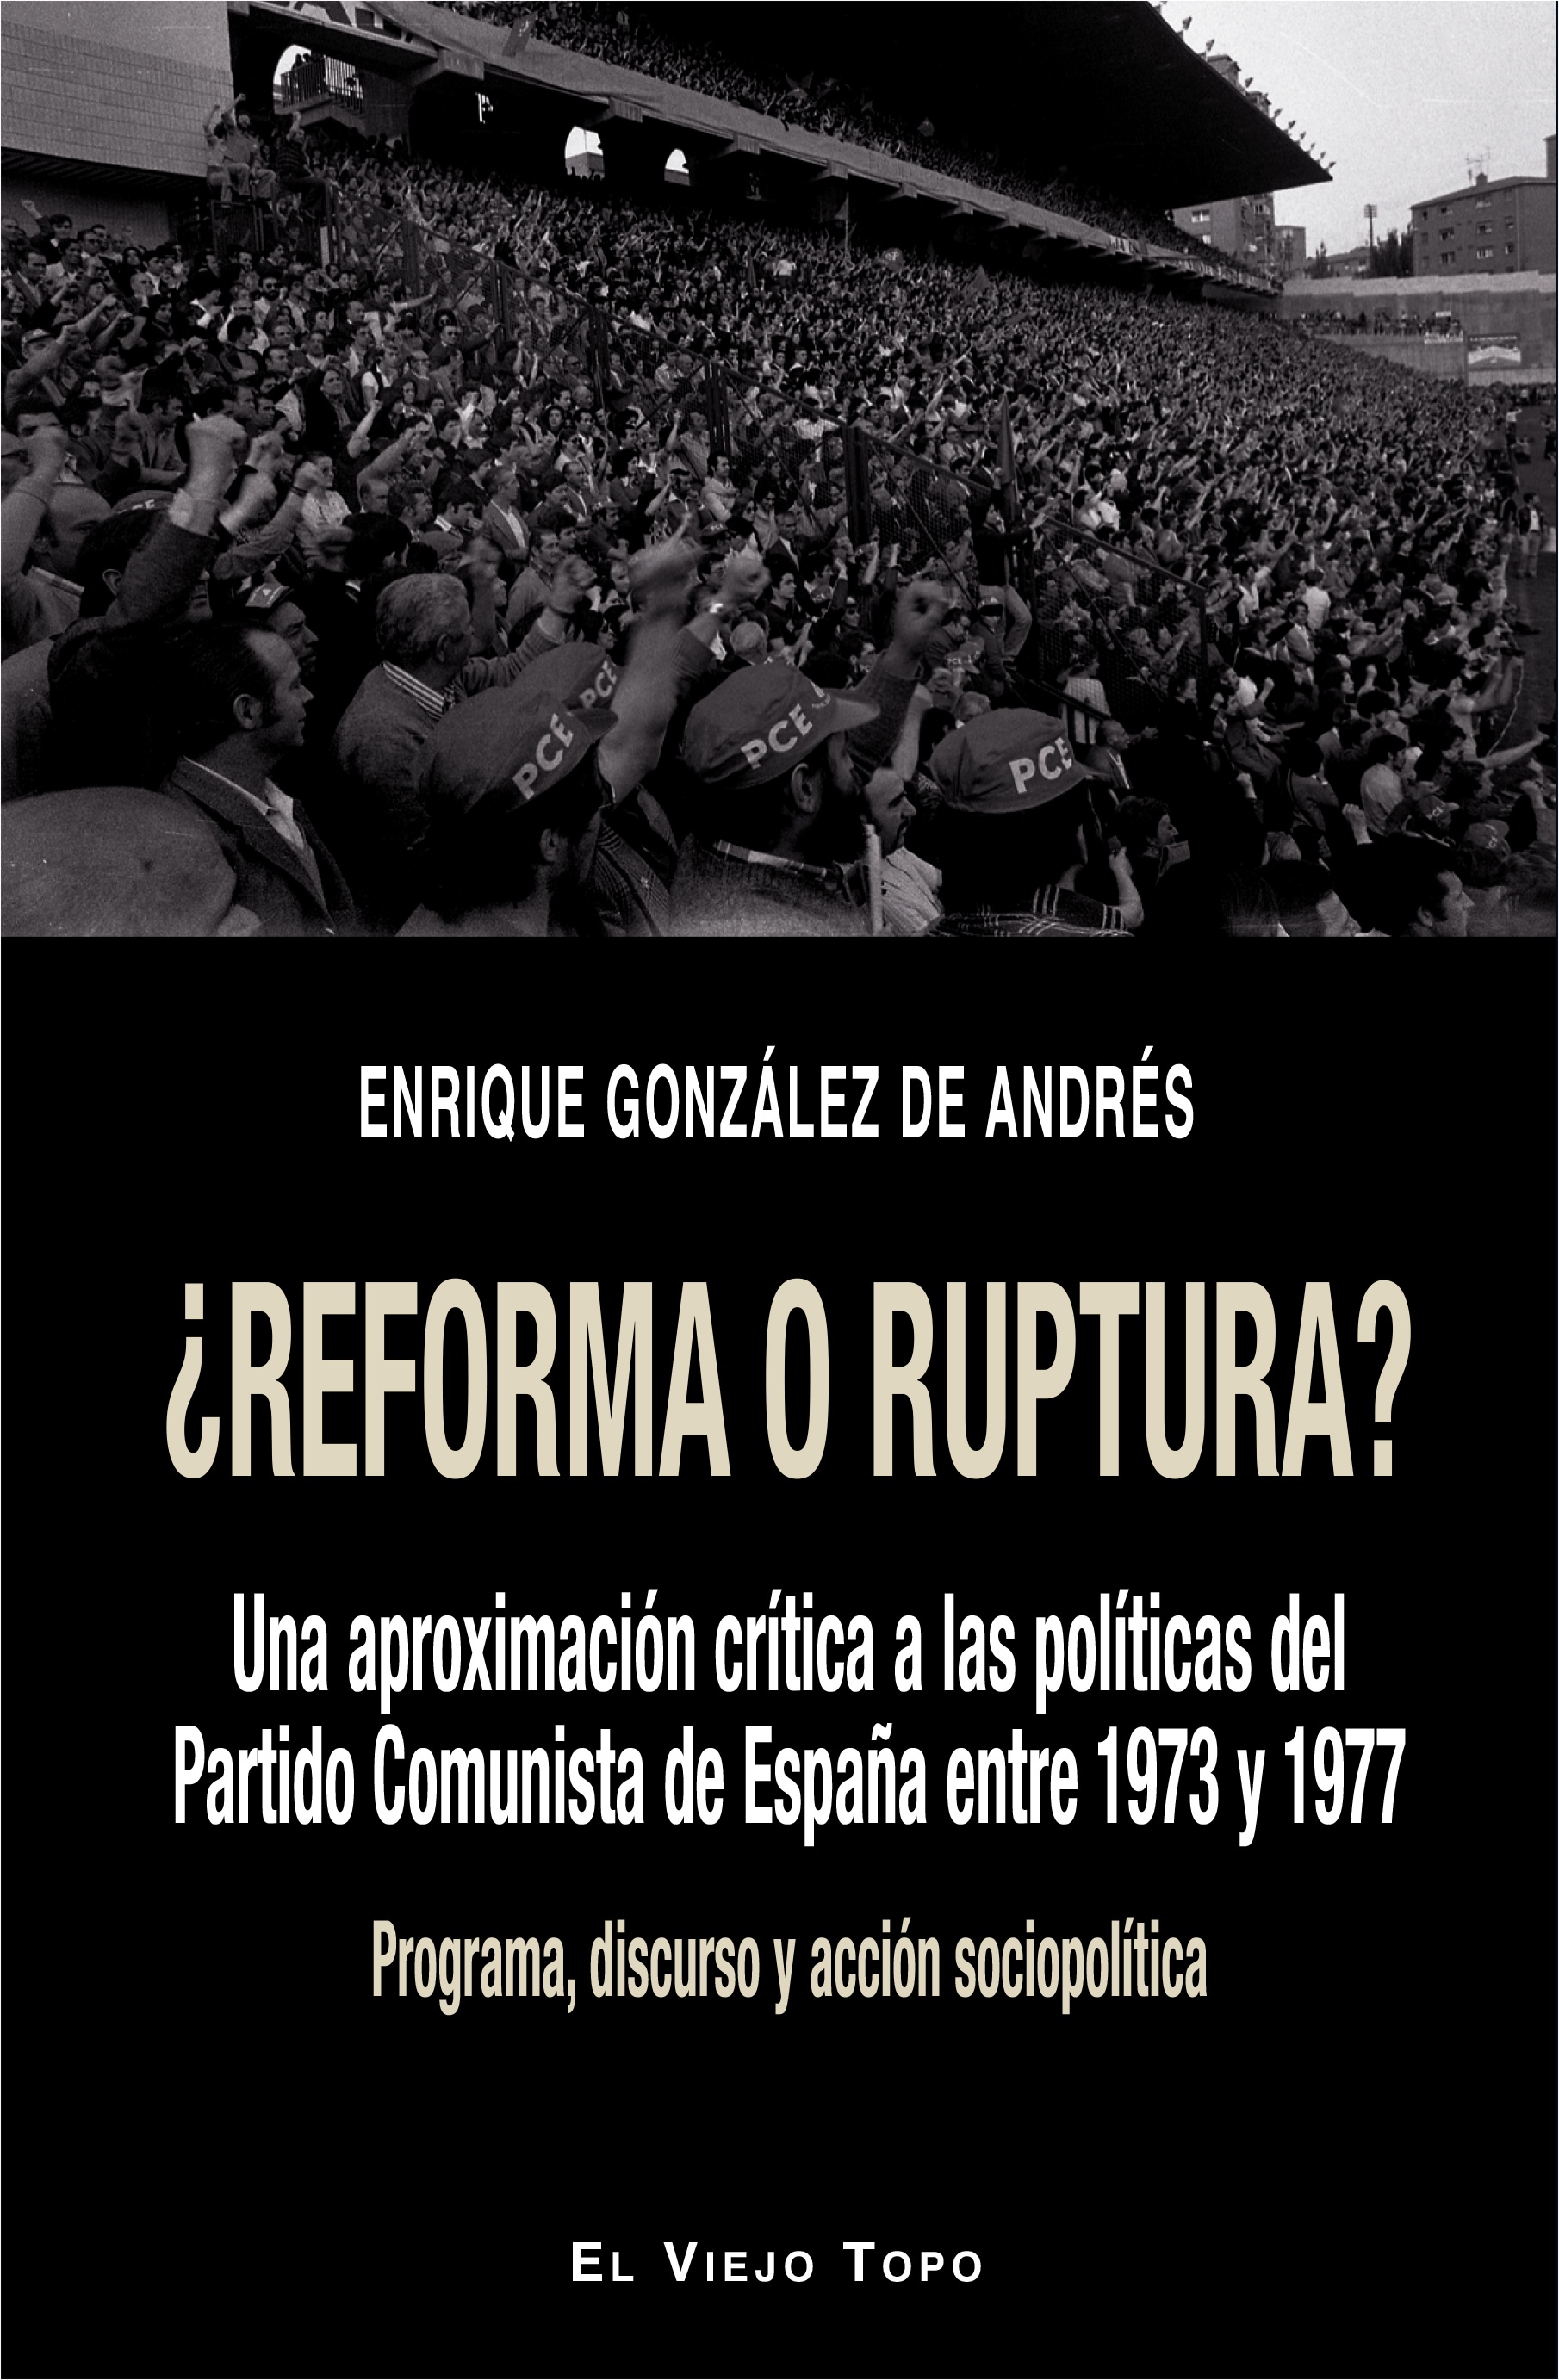 Enrique González de Andrés presenta "¿Reforma o ruptura?" 